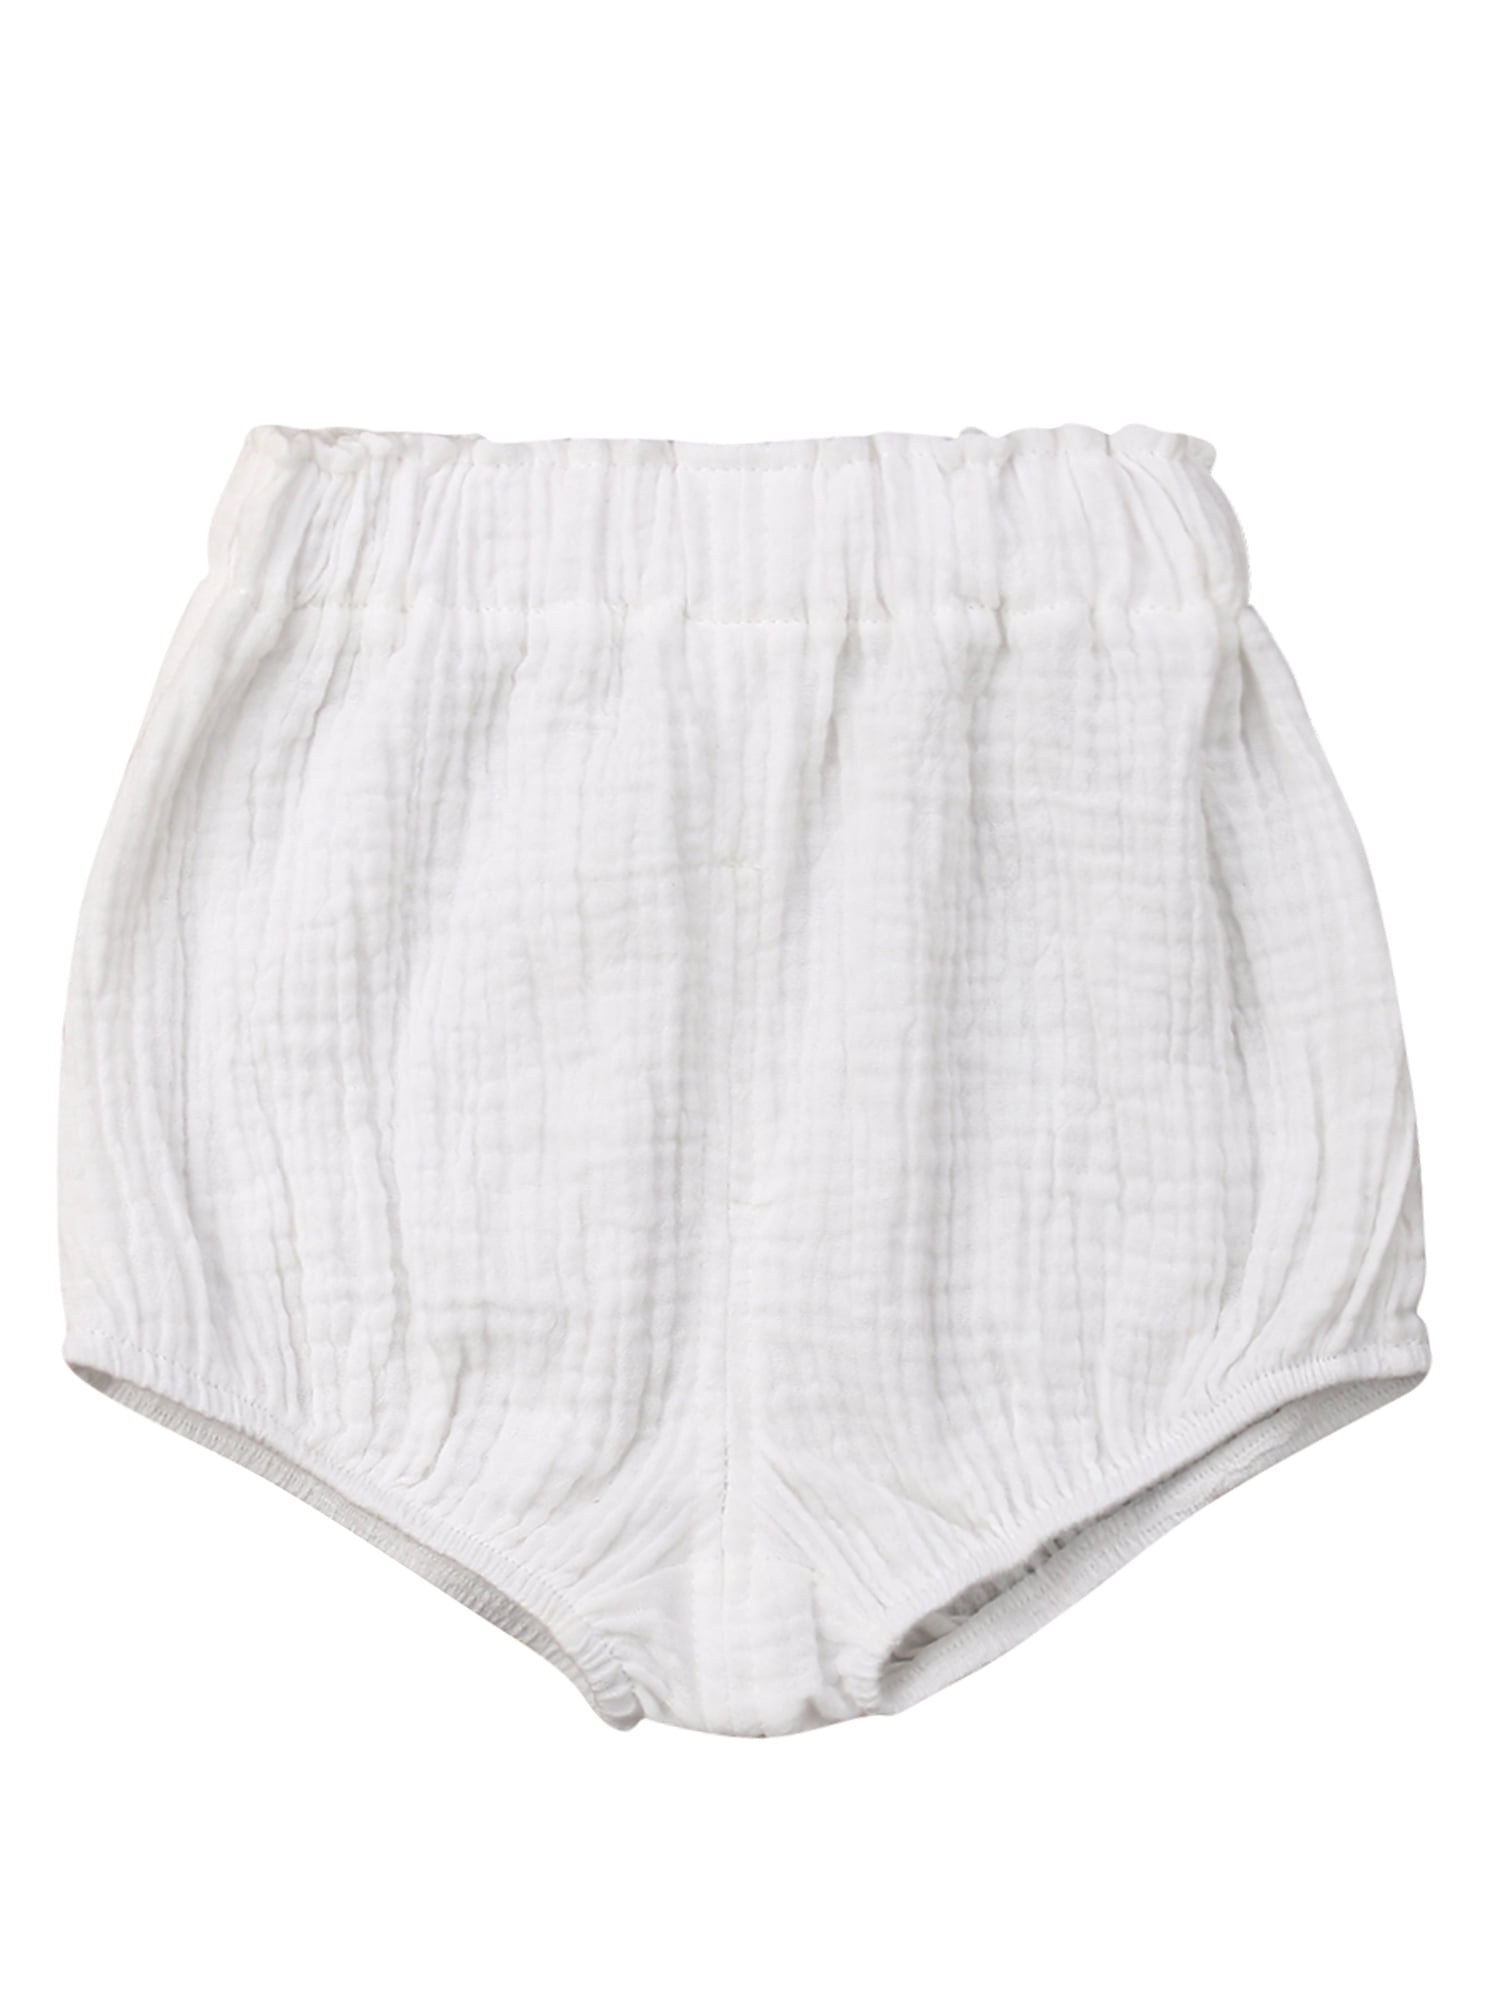 Summer Bottoms Kids Baby Boys Girls Fruit Print Bloomers Shorts Briefs Panties 